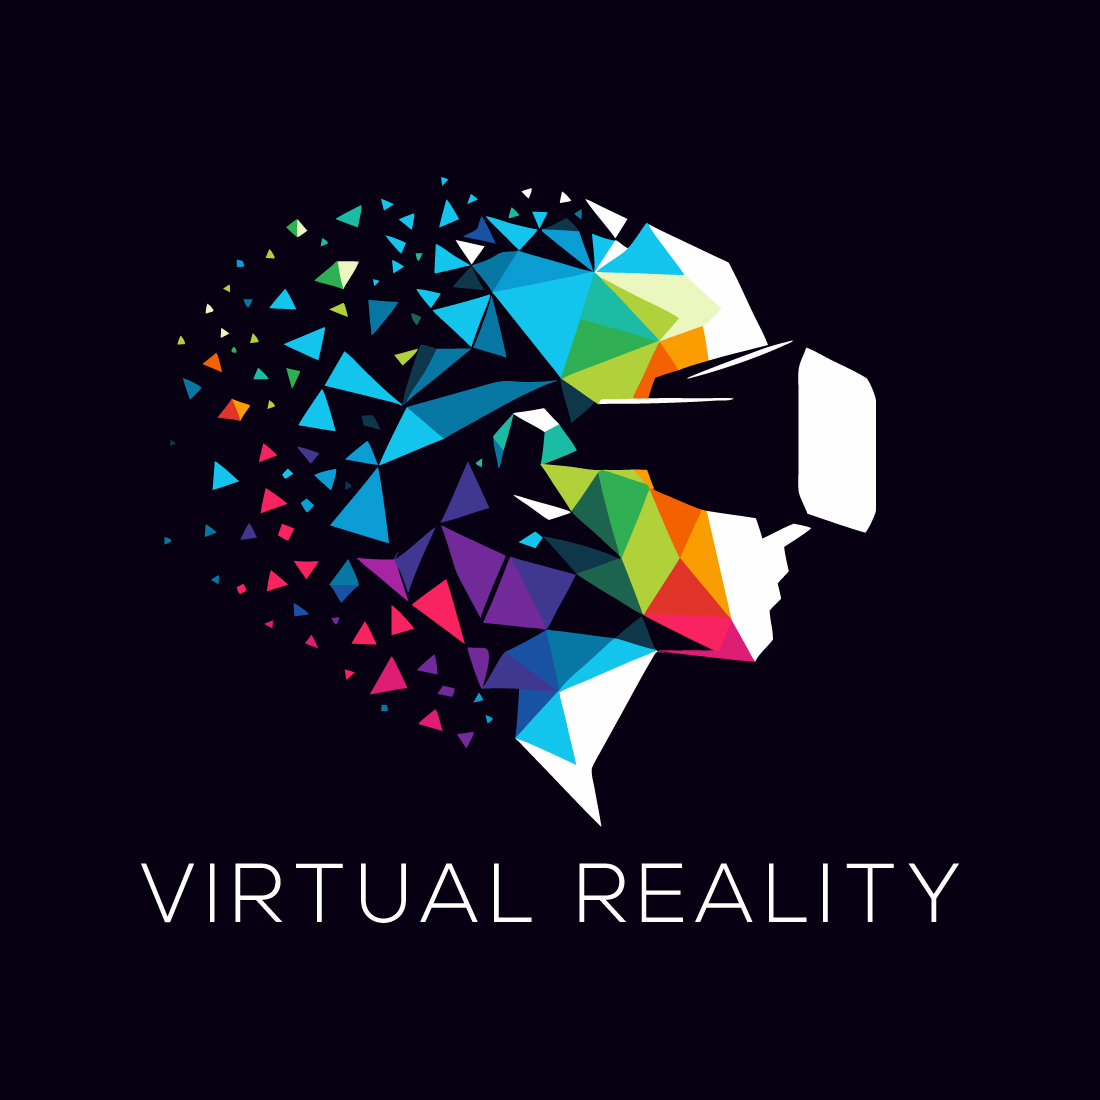 Virtual Reality Logo preview image.